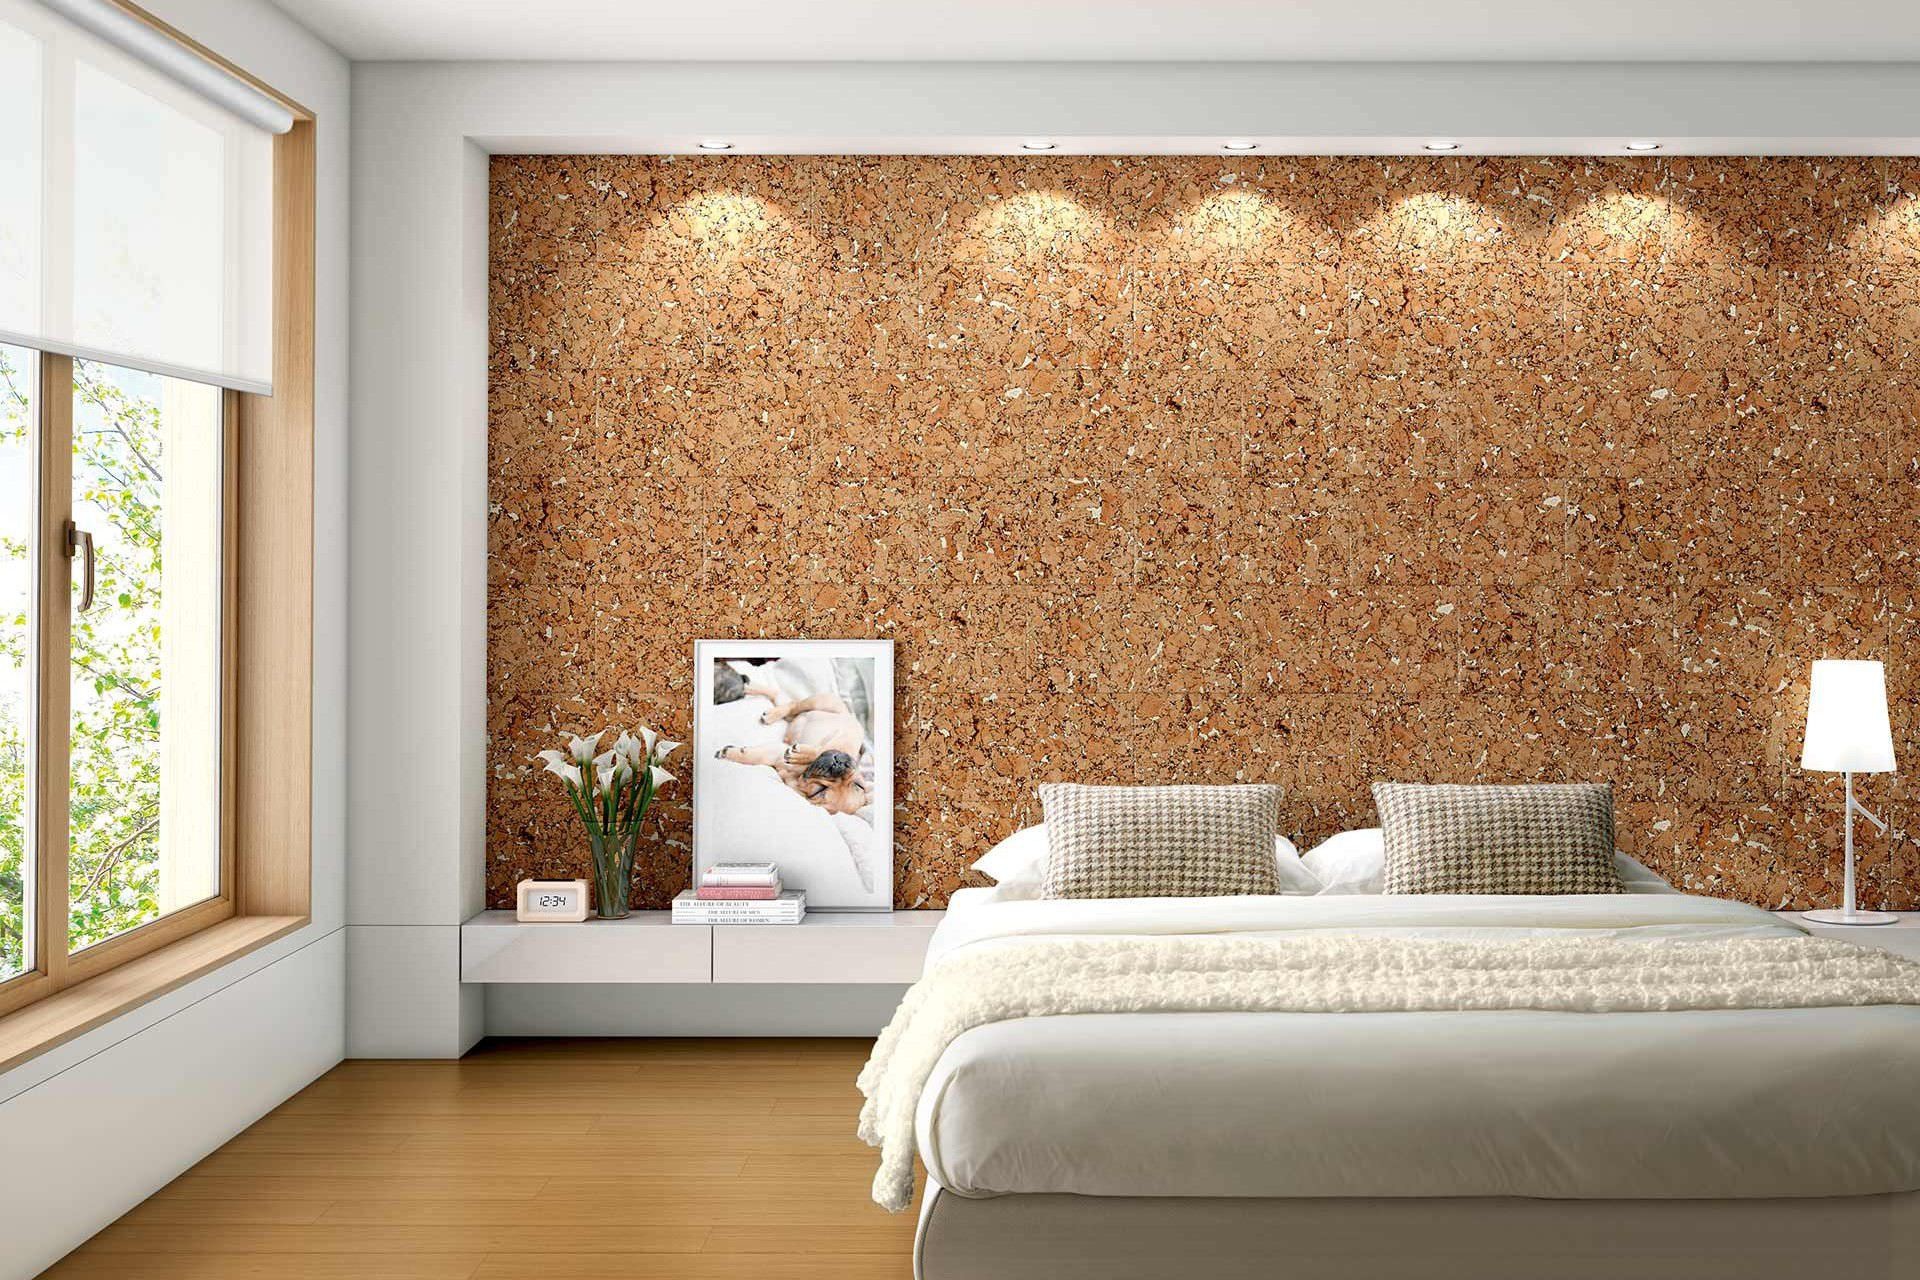 1920x1280 Cork Wall Tiles, Corks, Amazons, Bedroom